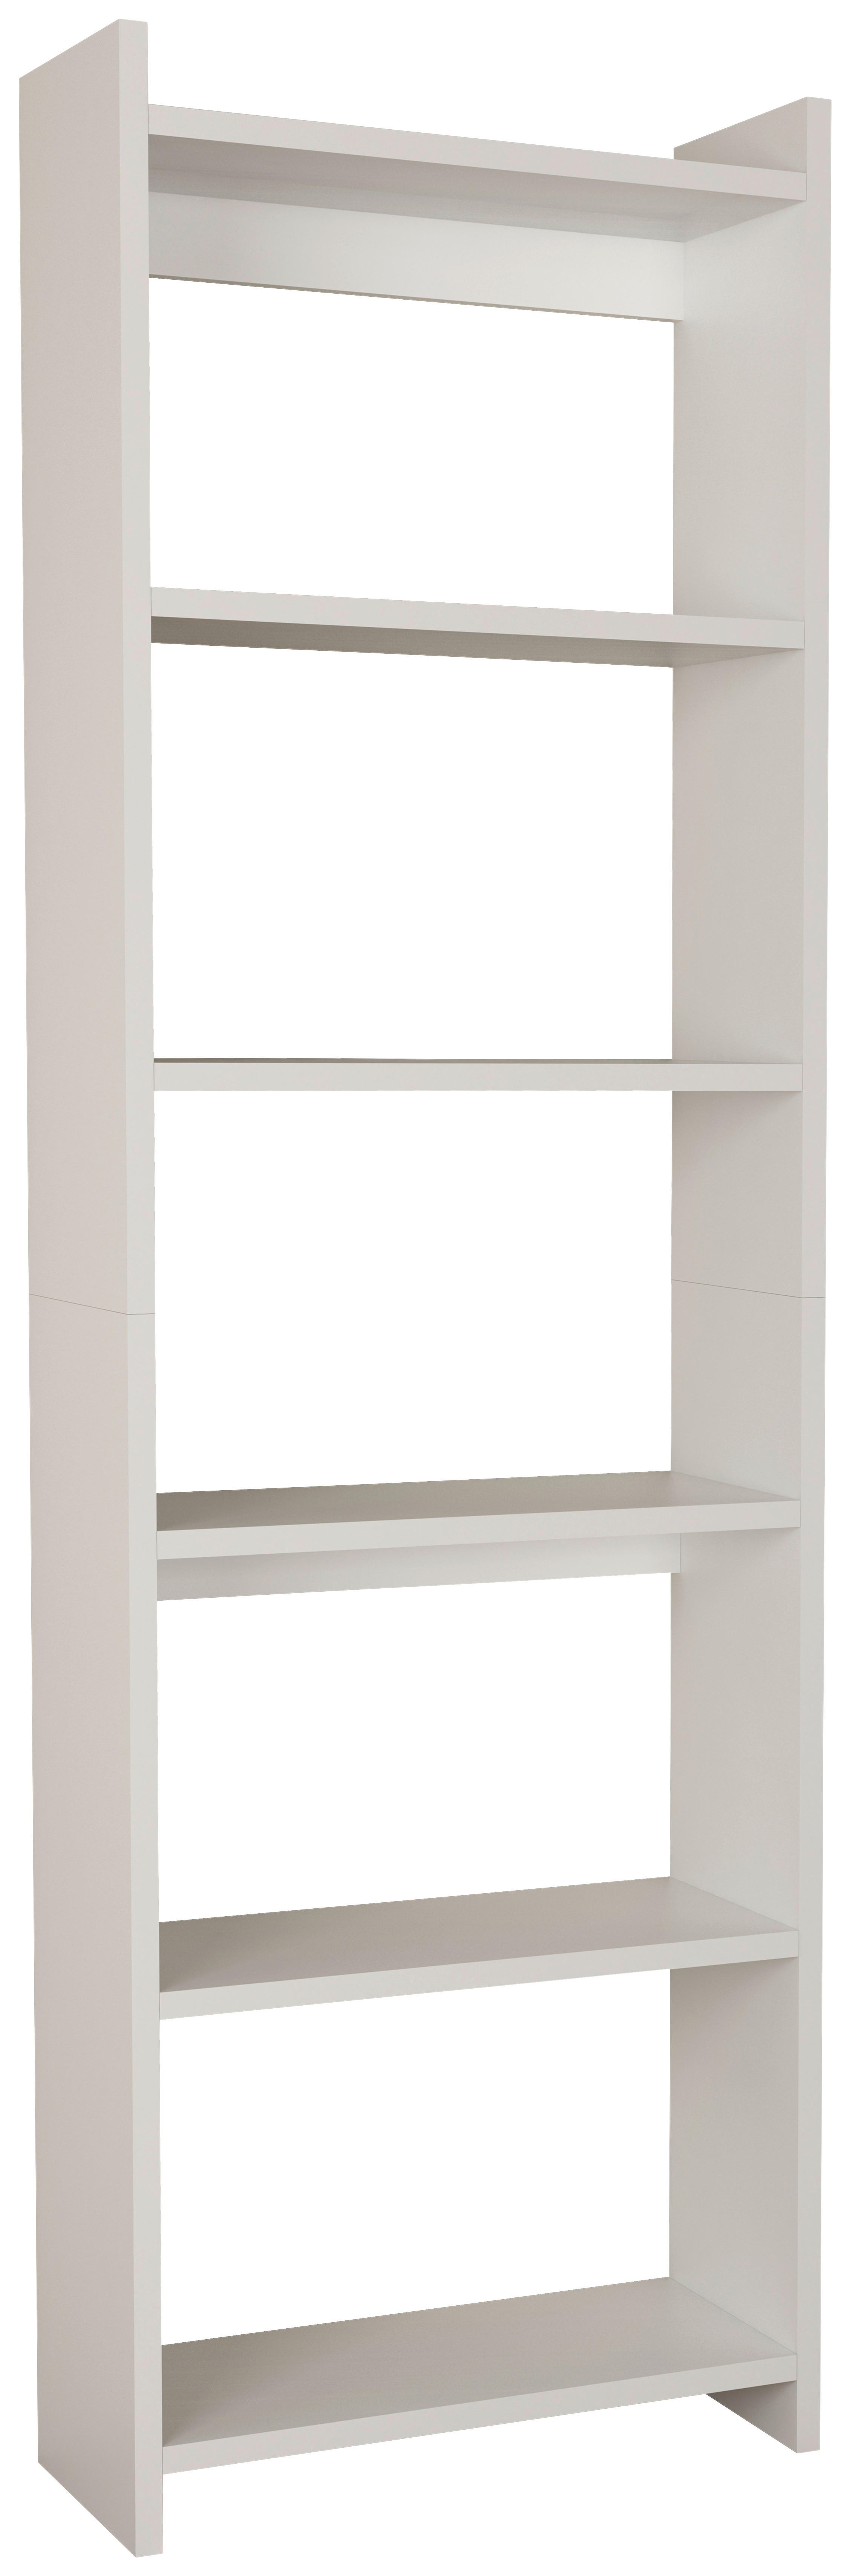 REGAL Weiß  - Weiß, MODERN, Holzwerkstoff (49/160/22cm) - MID.YOU